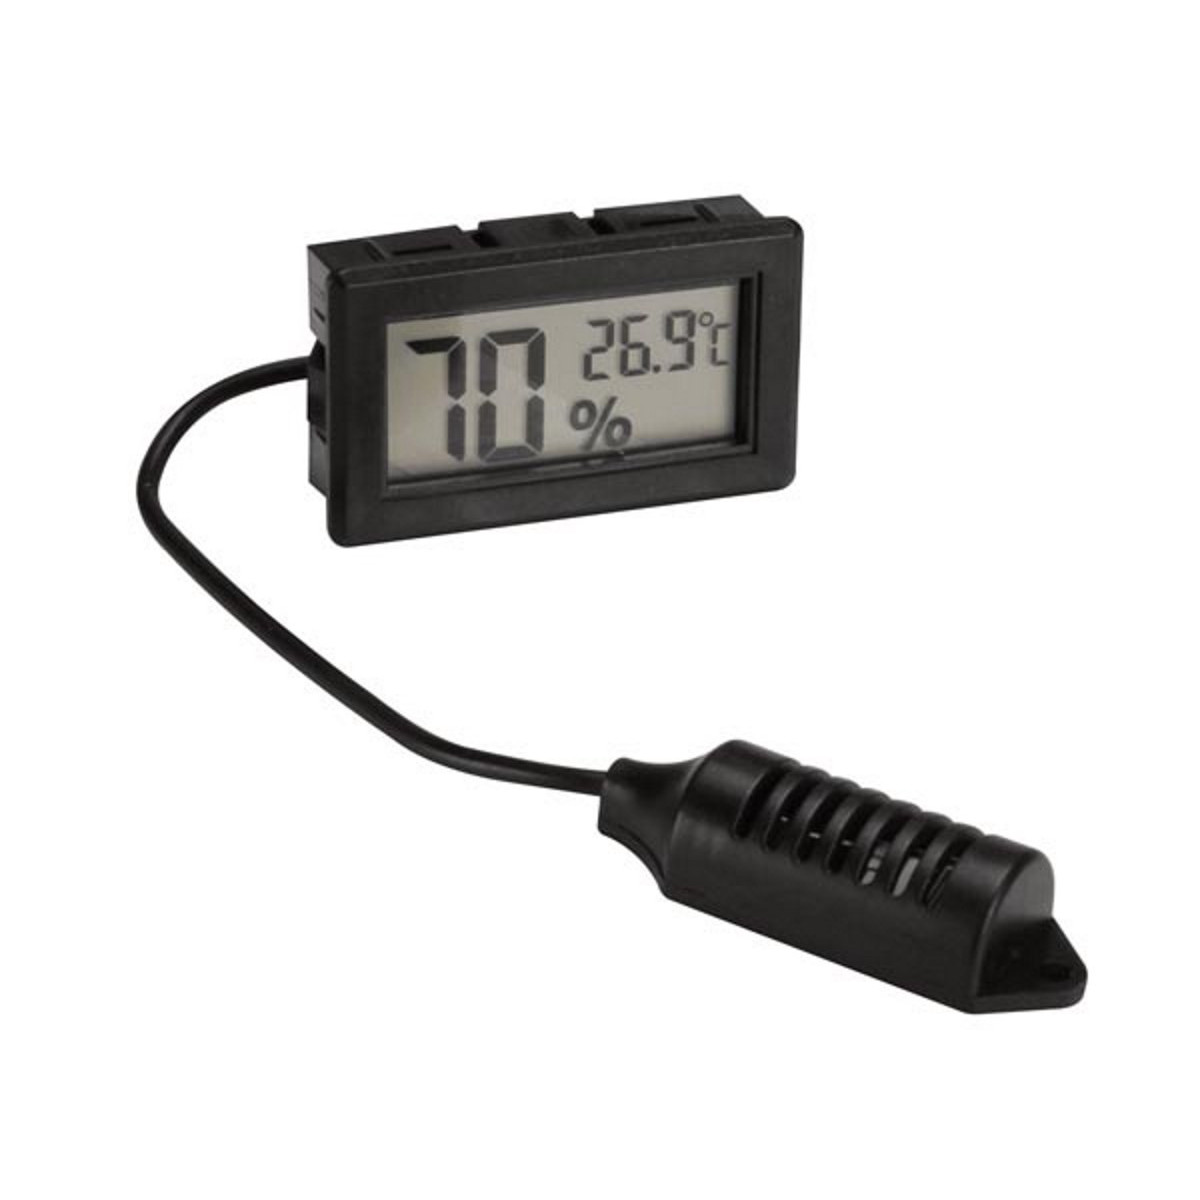 Humidimètre - thermomètre à affichage digital.